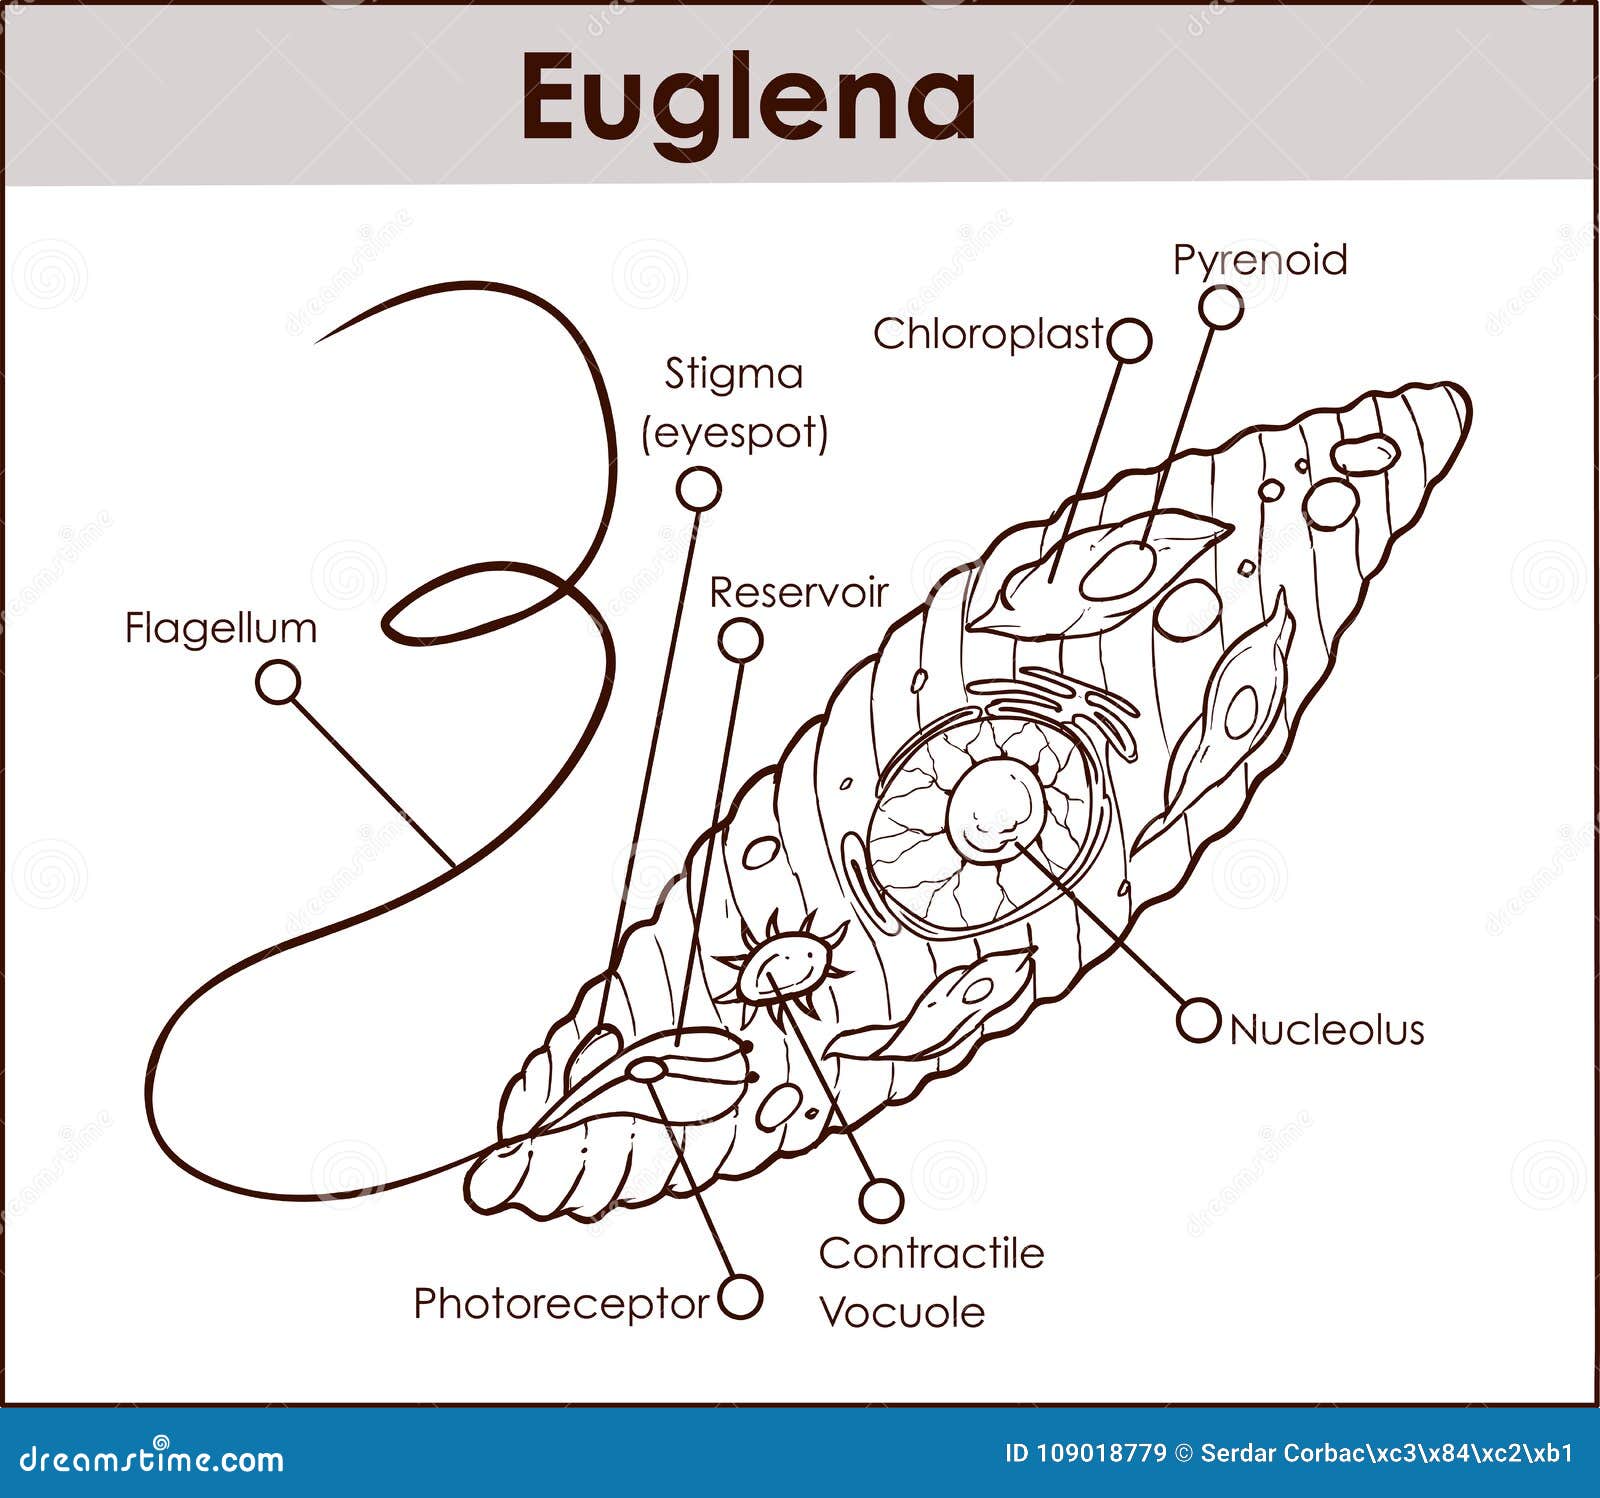  euglena cross section diagram representative protists euglenoid plant like and animal like microscopic creature with all c